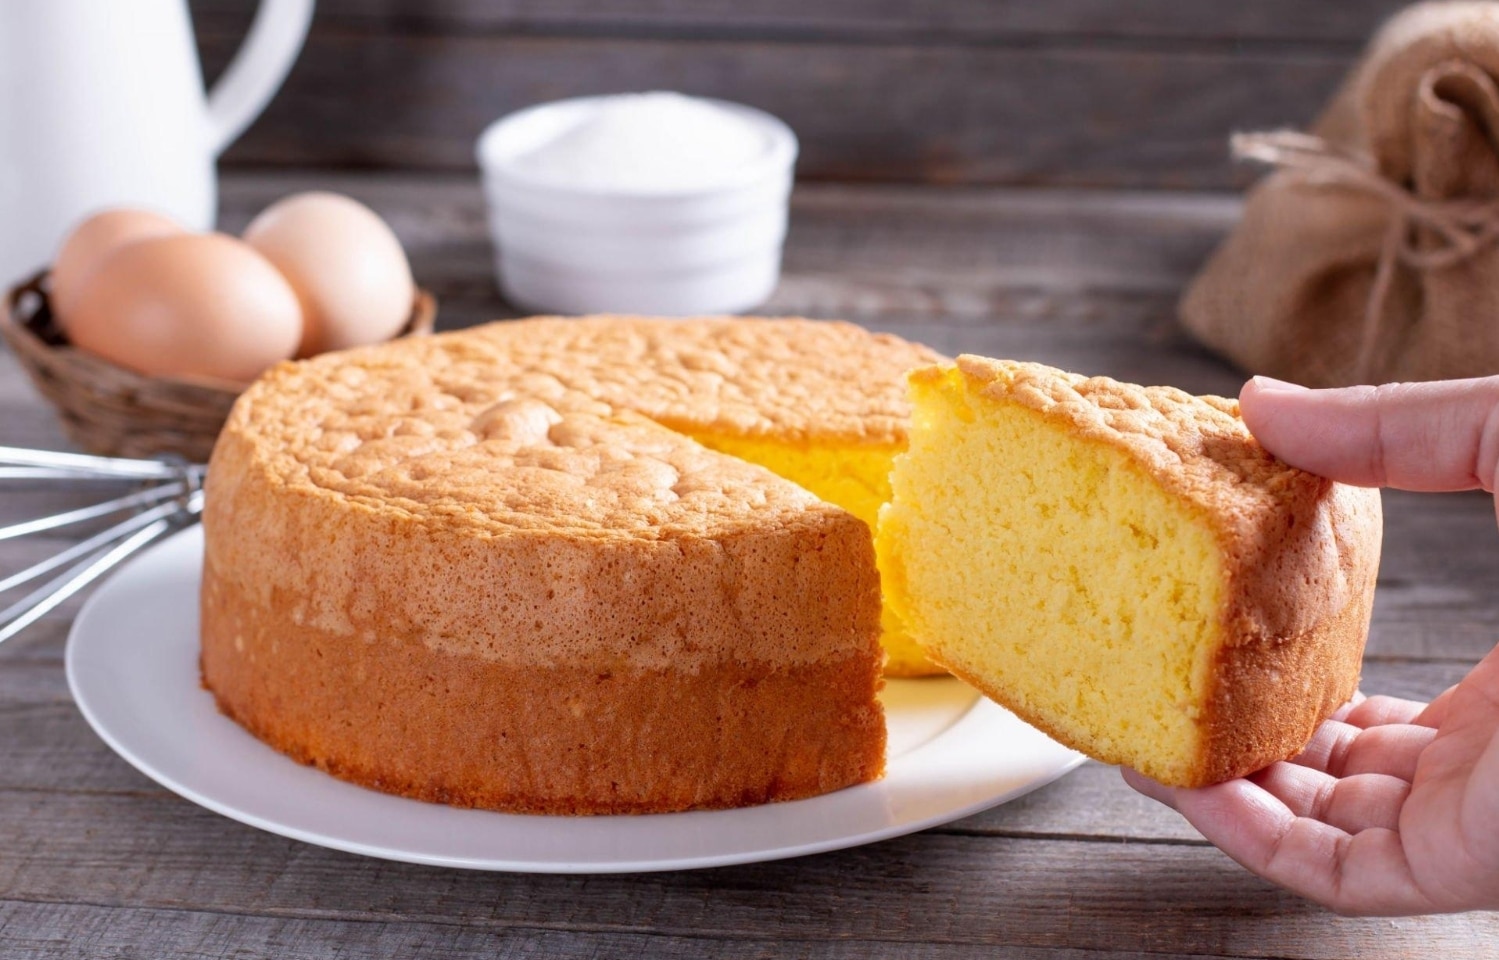 How to Make a Cake More Spongy?